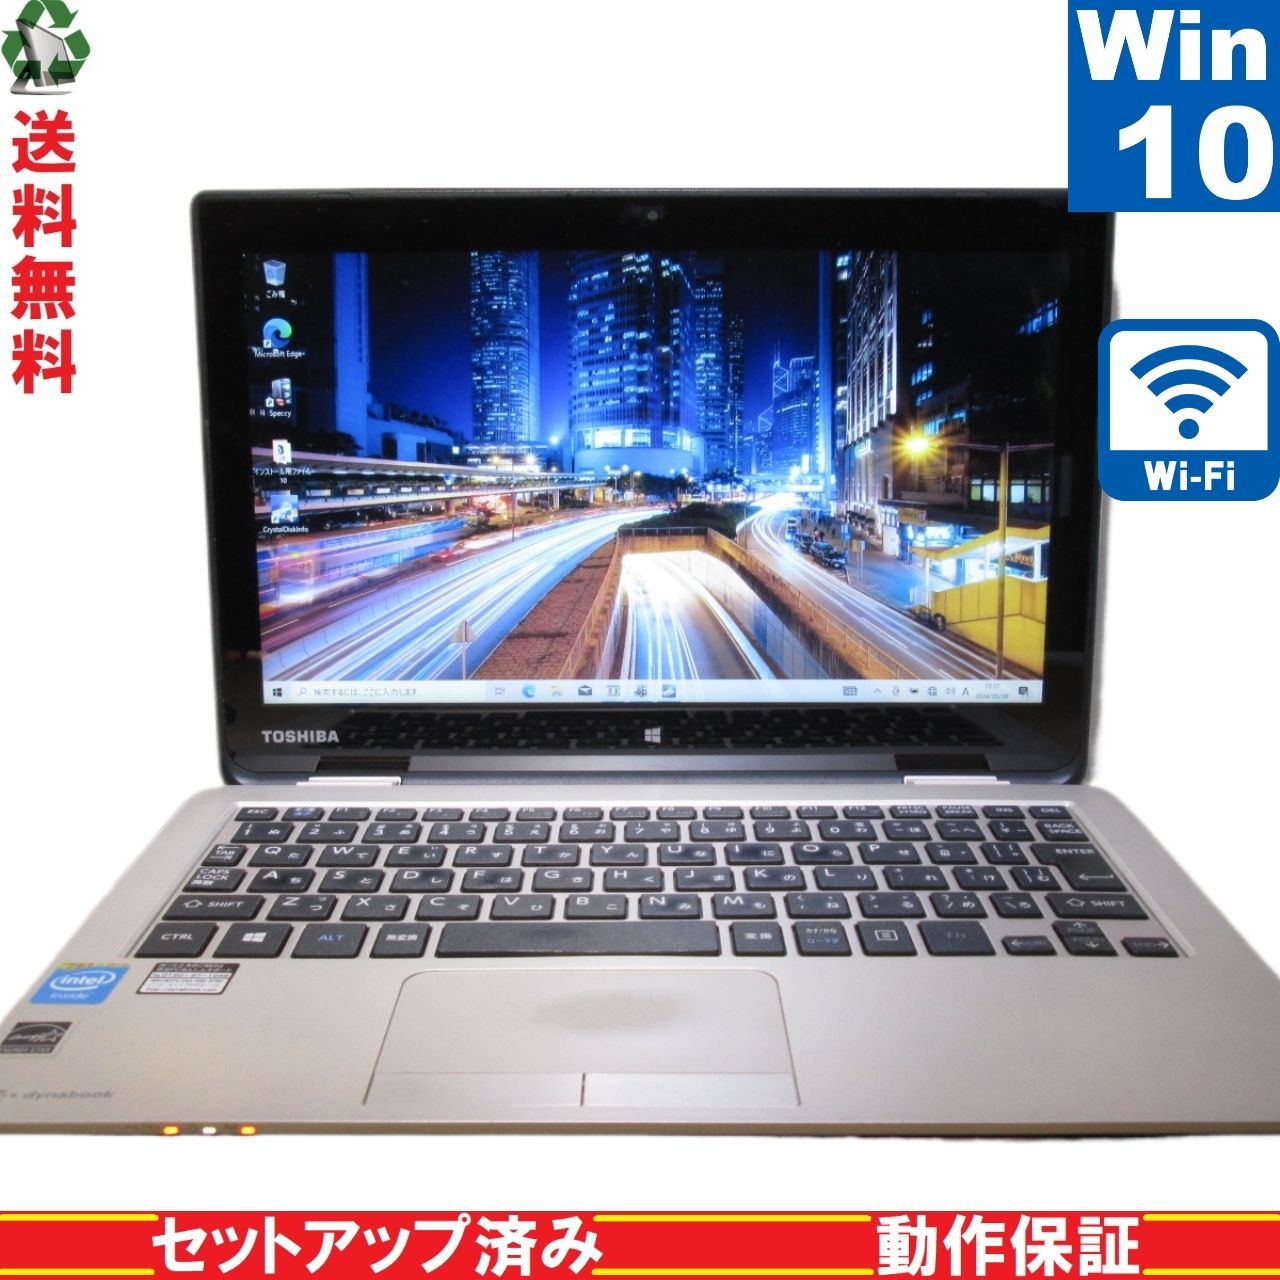 東芝 dynabook N51/NG【Celeron N2840 2.16GHz】　【Windows10 Home】 Libre Office 充電可  Wi-Fi HDMI 保証付 [89286]